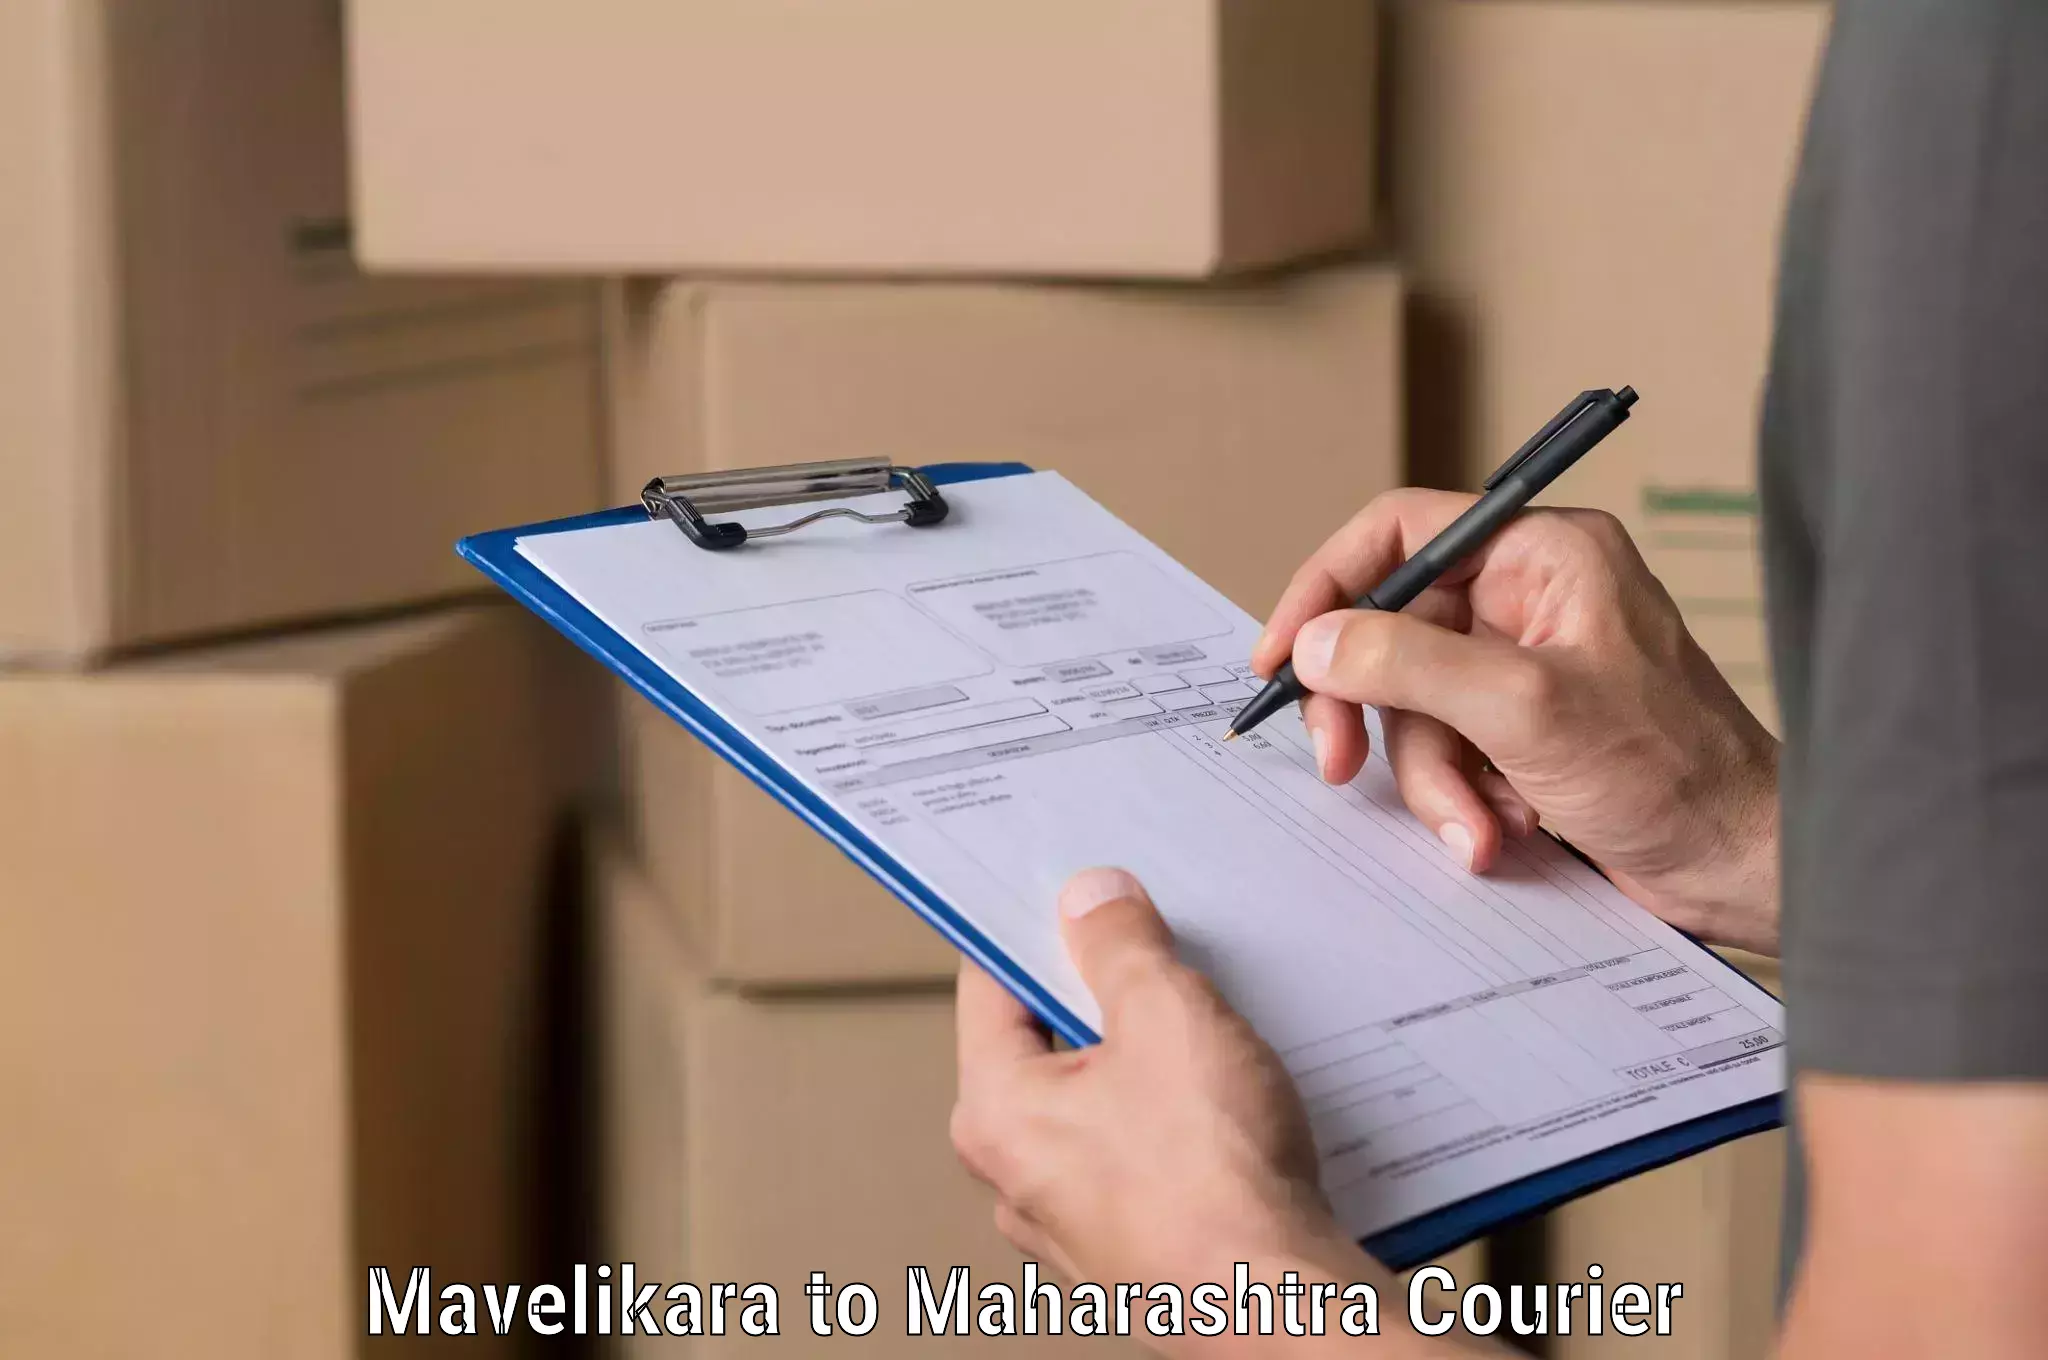 24-hour courier service in Mavelikara to Savitribai Phule Pune University